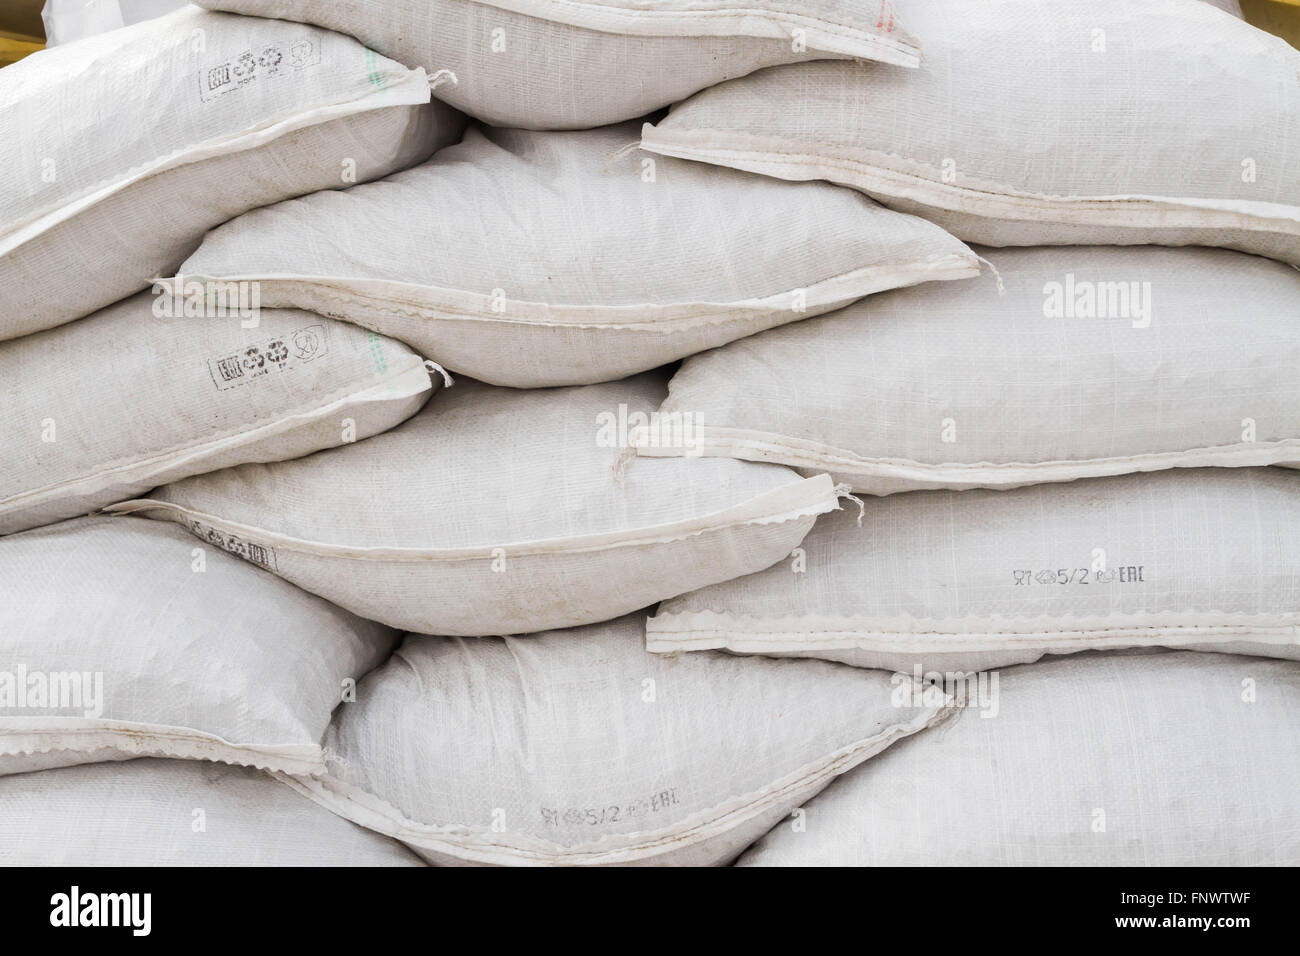 2 sand bags Stock Photo - Alamy